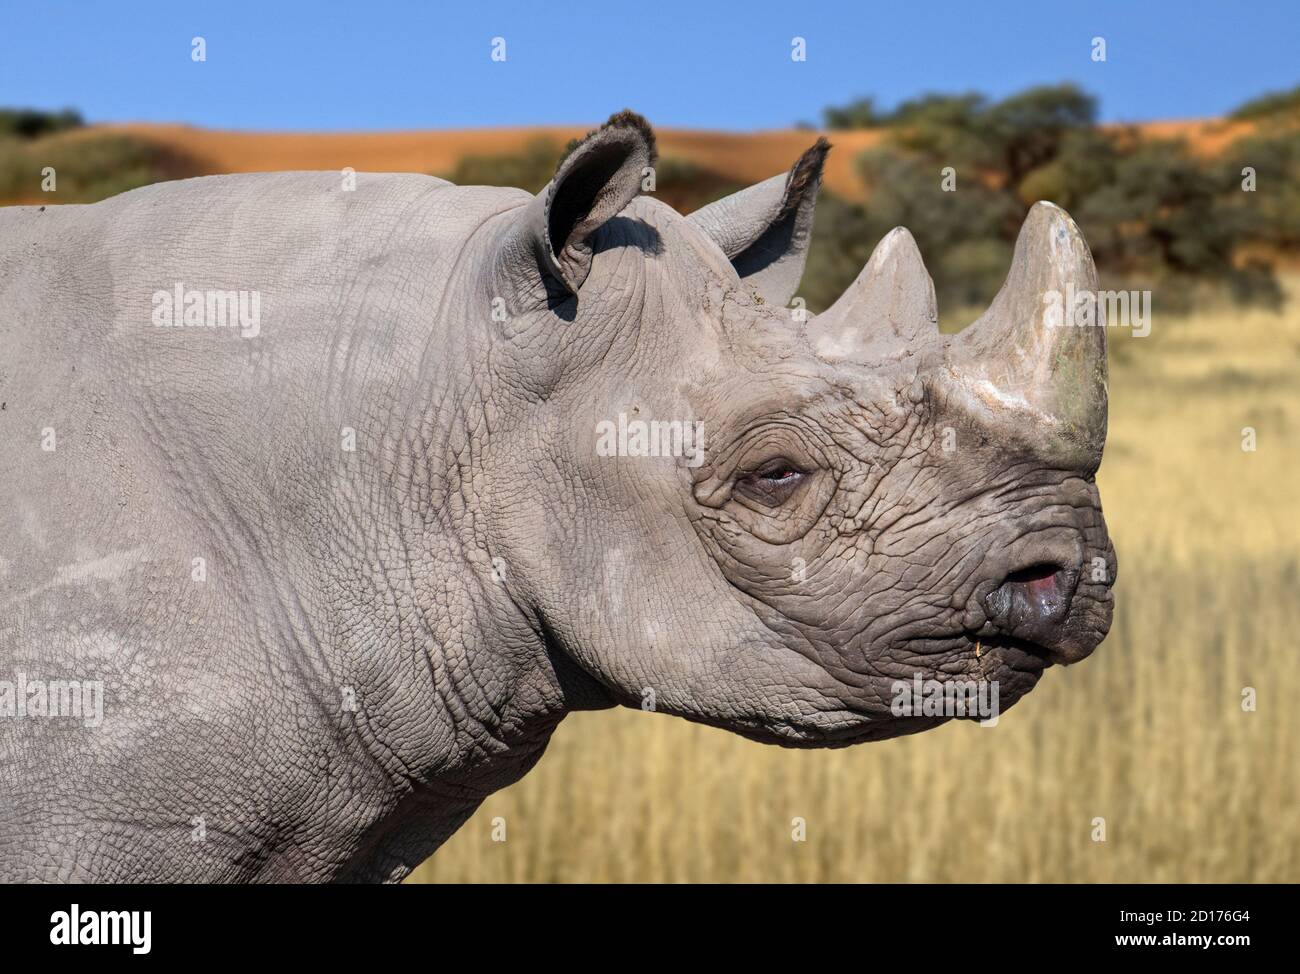 Rinoceronte nero orientale / rinoceronte nero africano orientale / orientale Rinoceronte con gancio (Diceros bicornis michaeli) Foto Stock